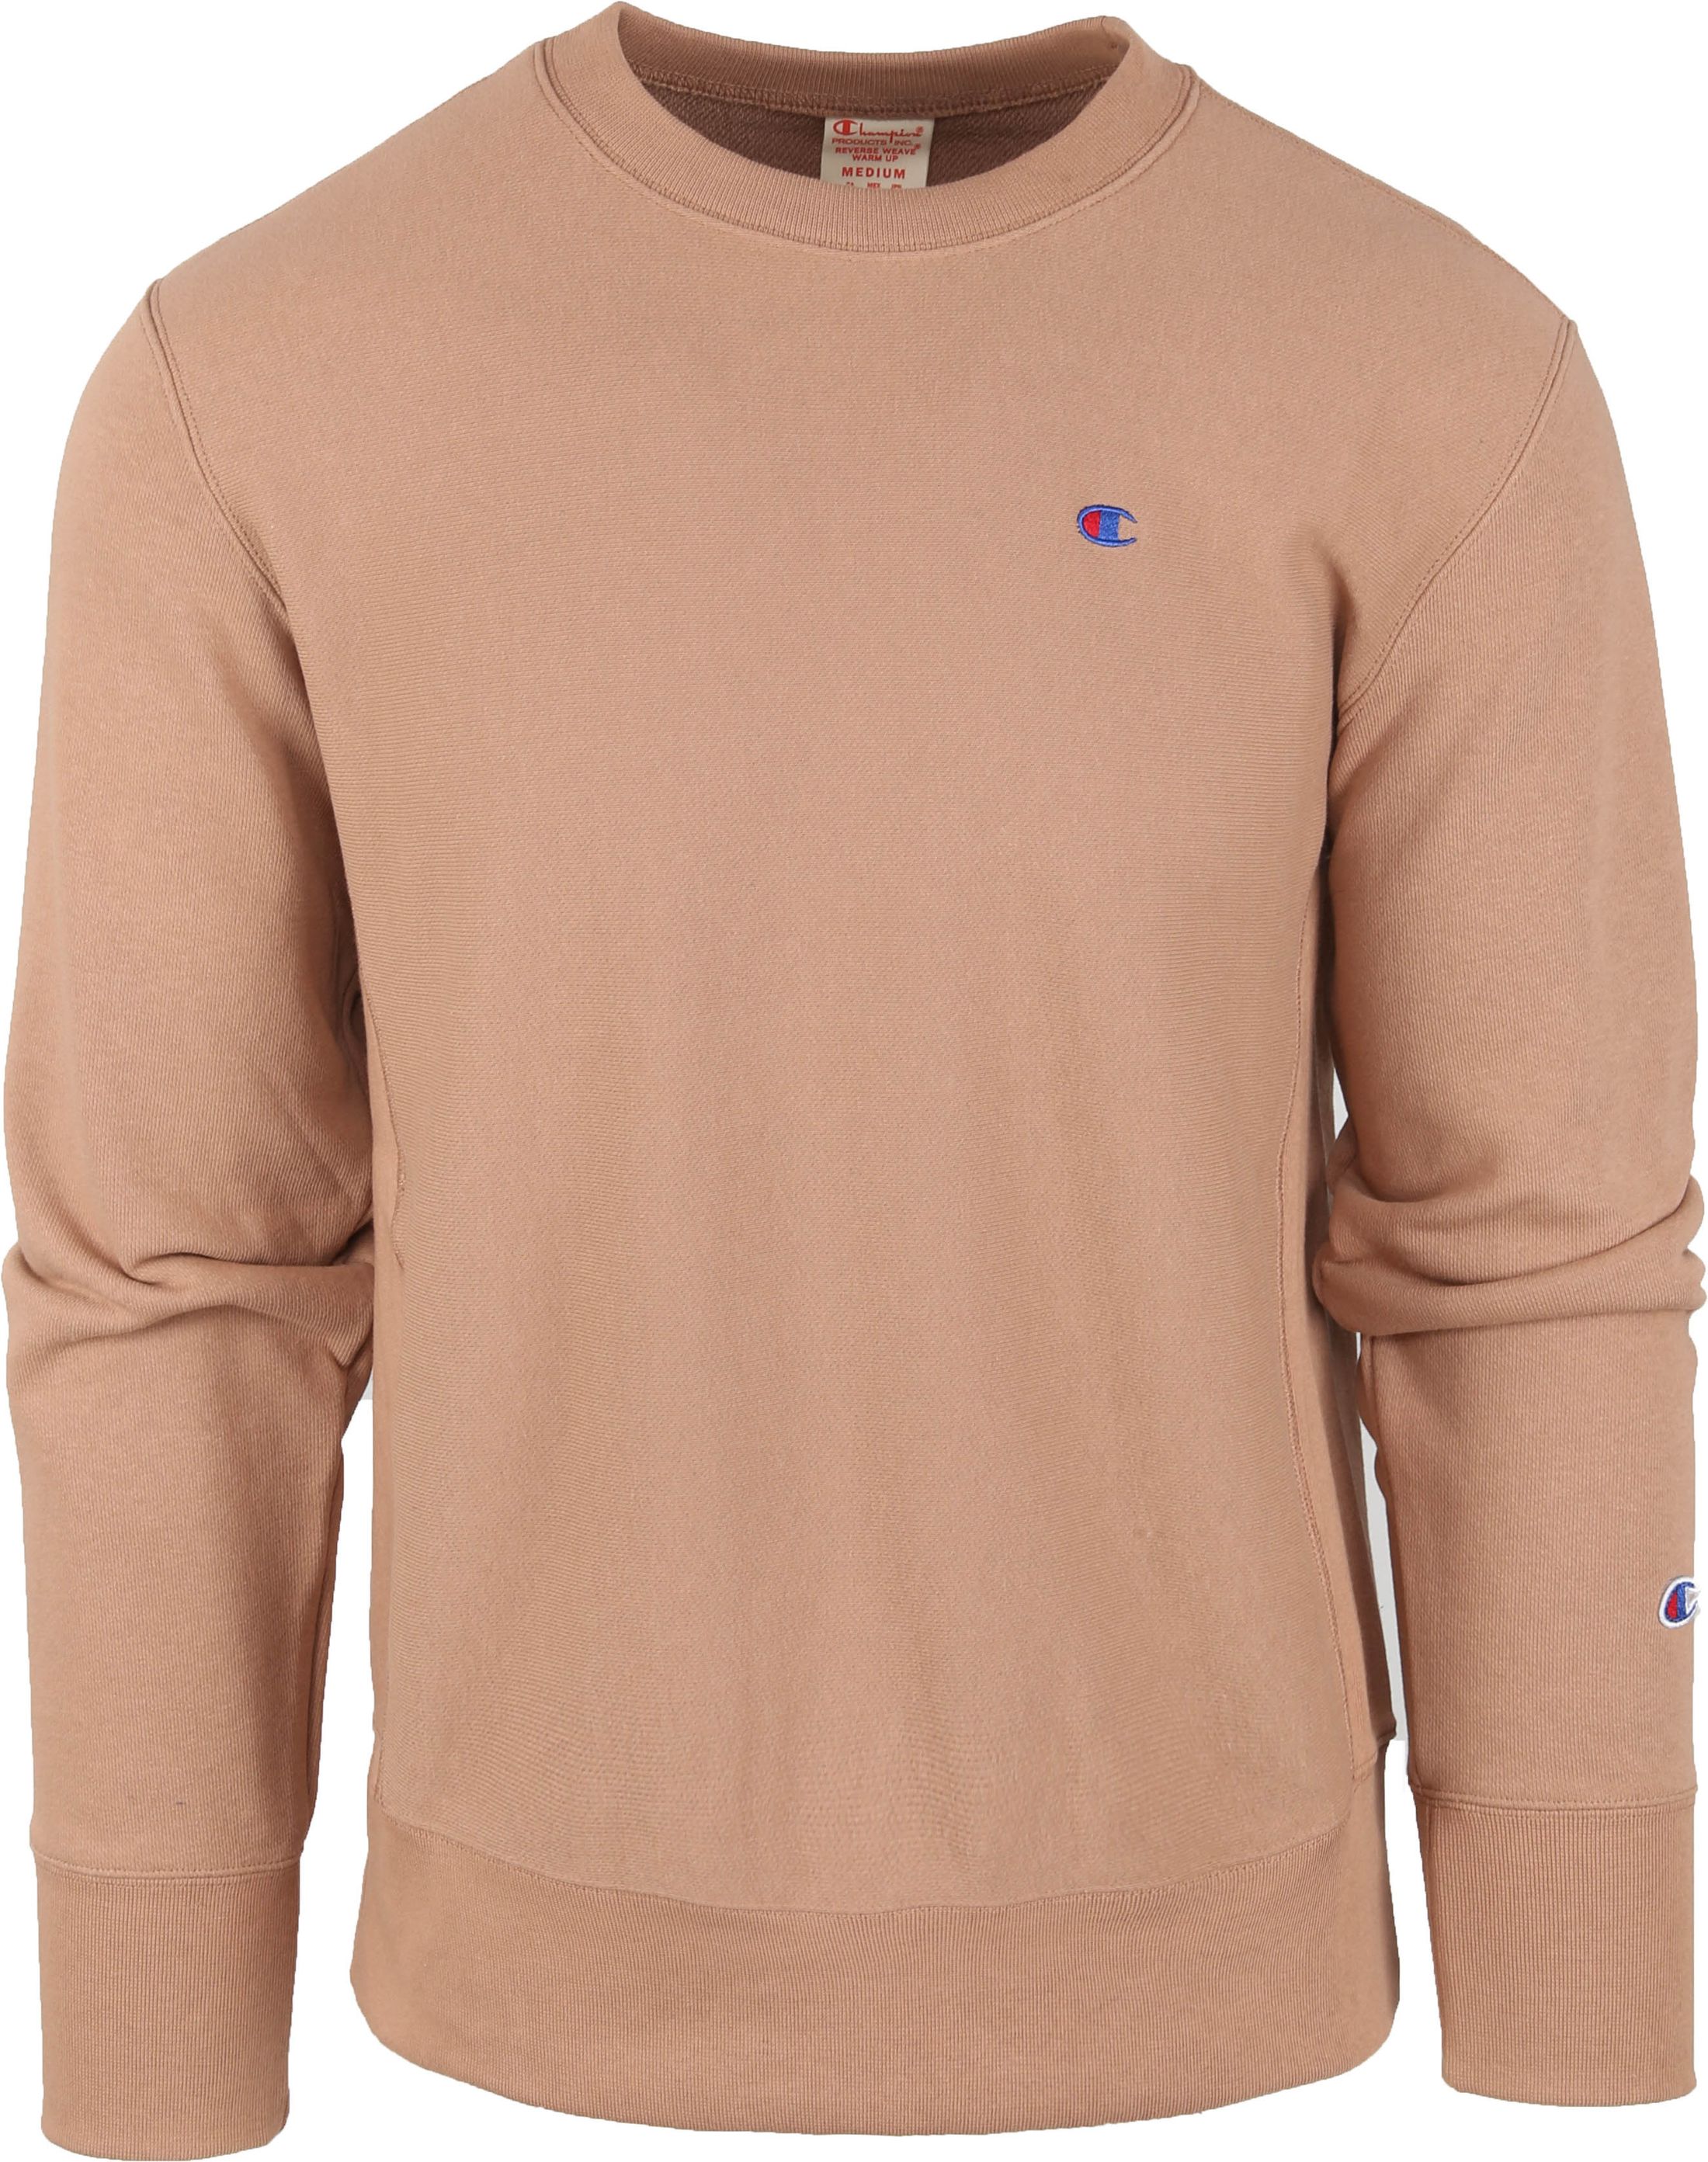 Champion Crewneck Sweater Brown size L